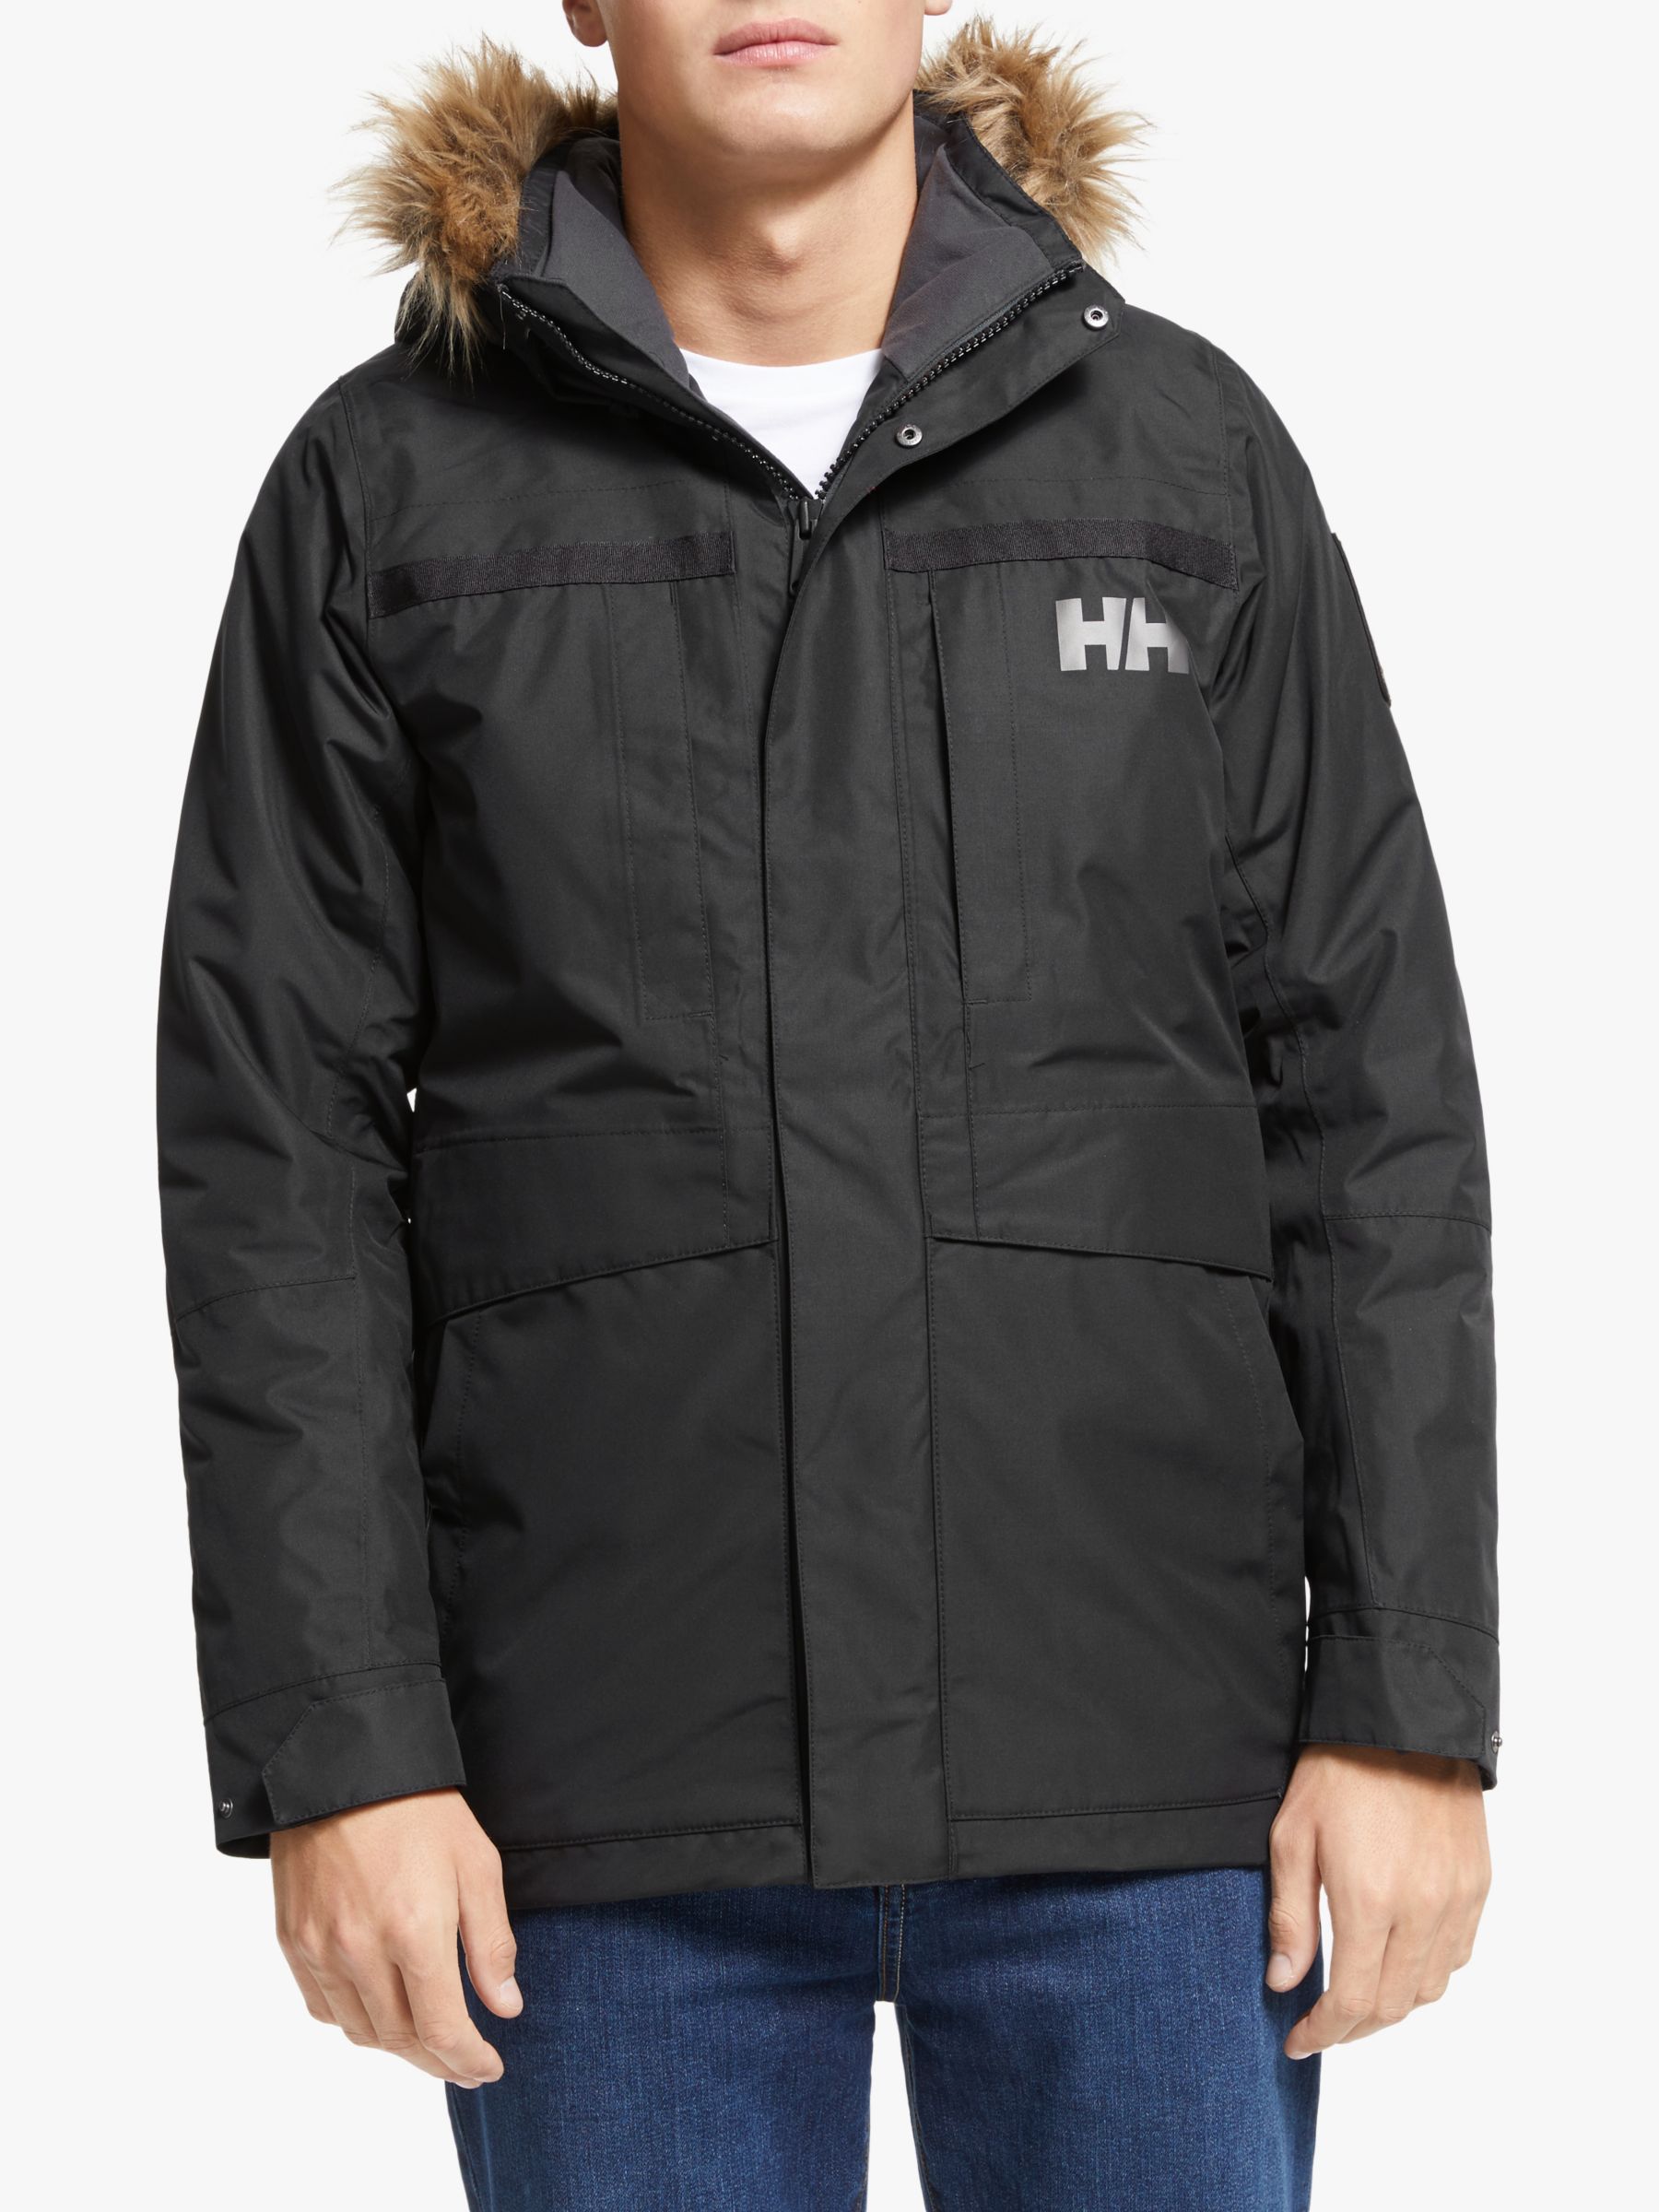 Helly Hansen Coastal 2 Men's Waterproof Parka Jacket, Black at John ...